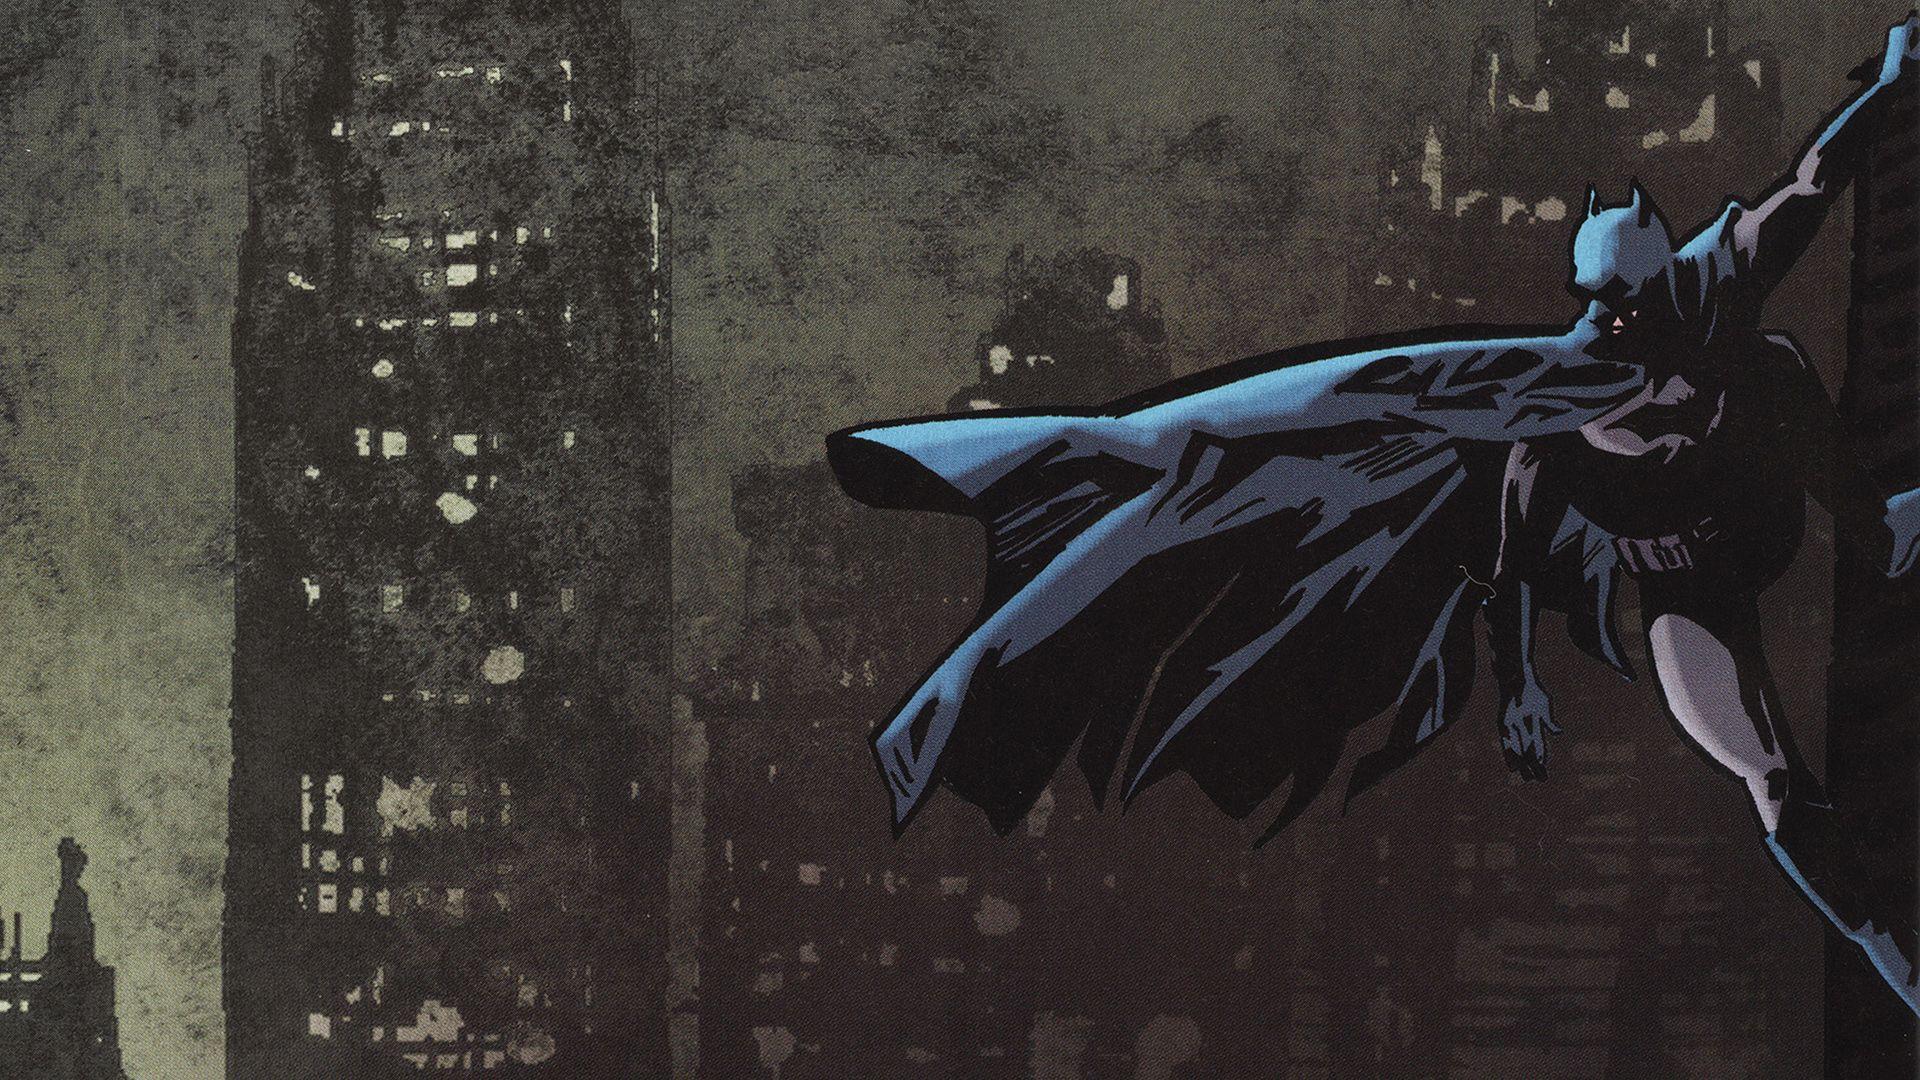 batman #wallpaper  Batman wallpaper, Batman painting, Batman art